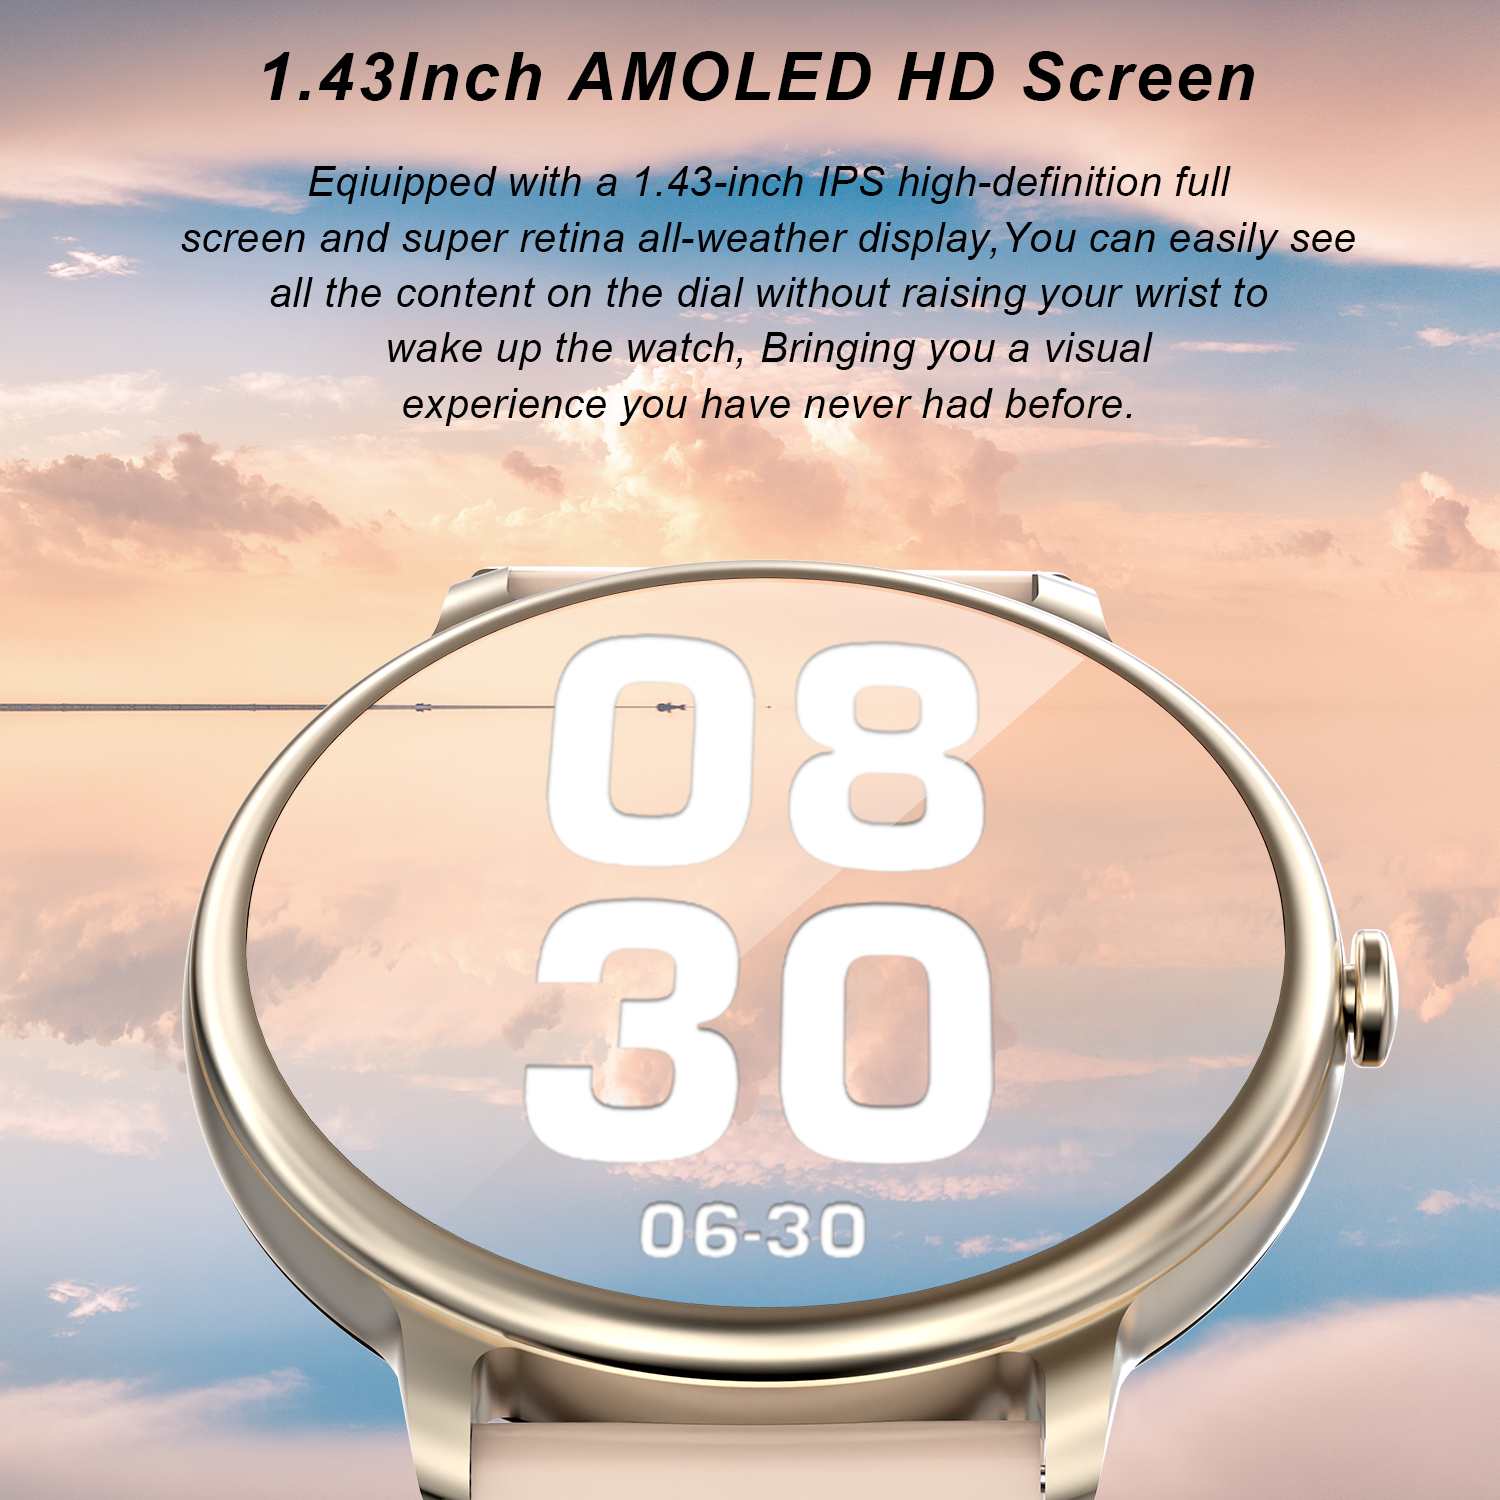 MANIKE KM60 Smartwatch stainless steel 210 Silikon, mm, 140 - Orange